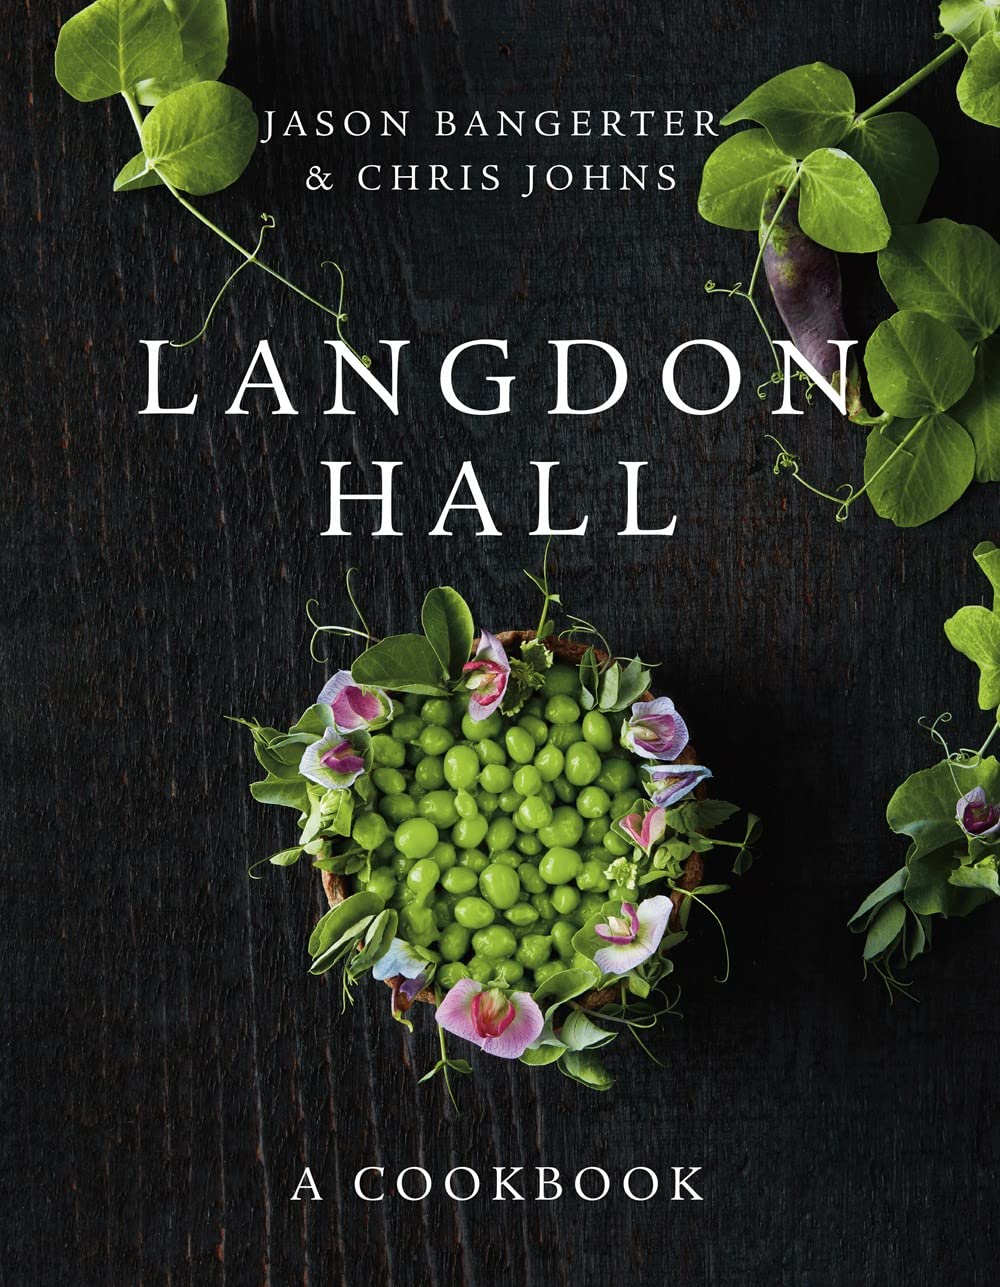 Langdon Hall: A Cookbook (Jason Bangerte, Chris Johns)